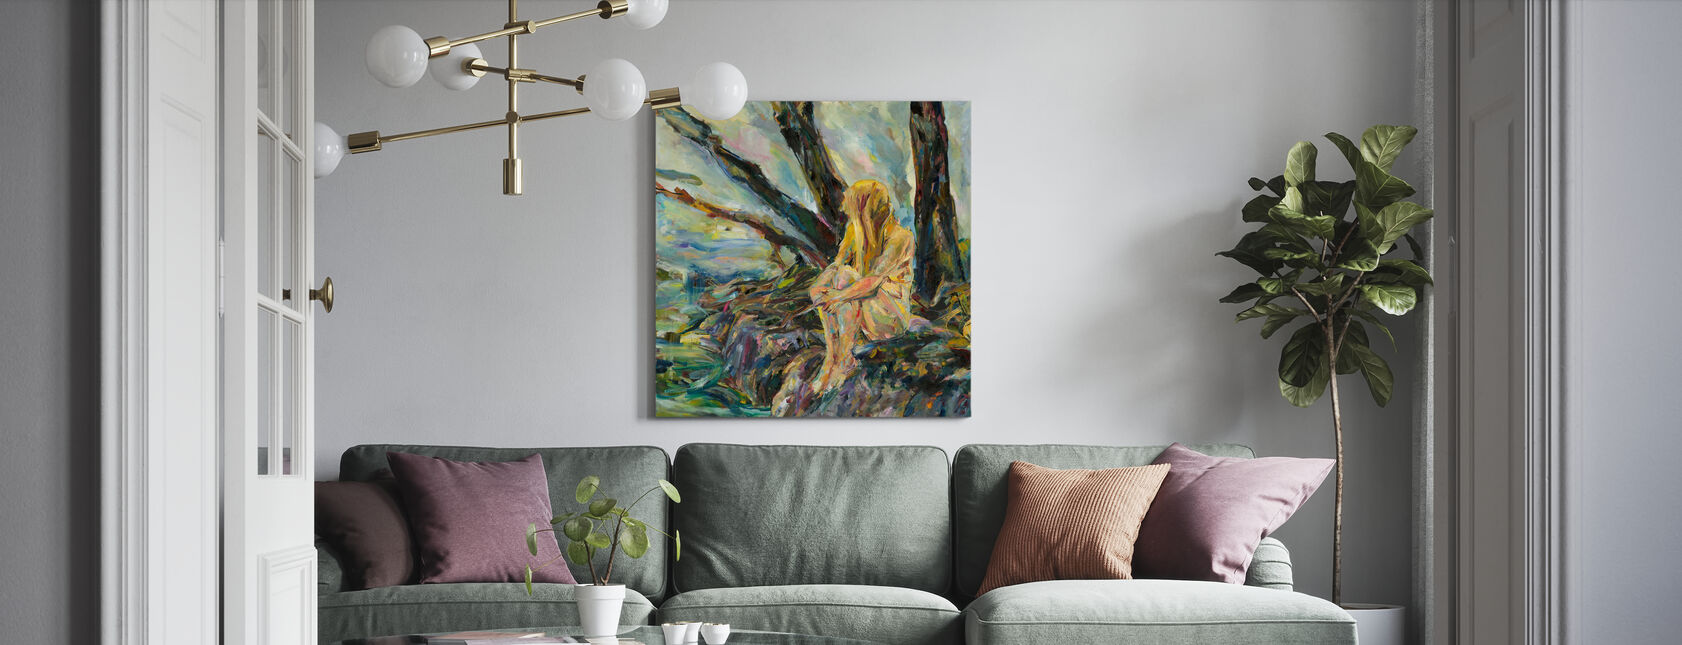 Dromskog - Canvas print - Living Room